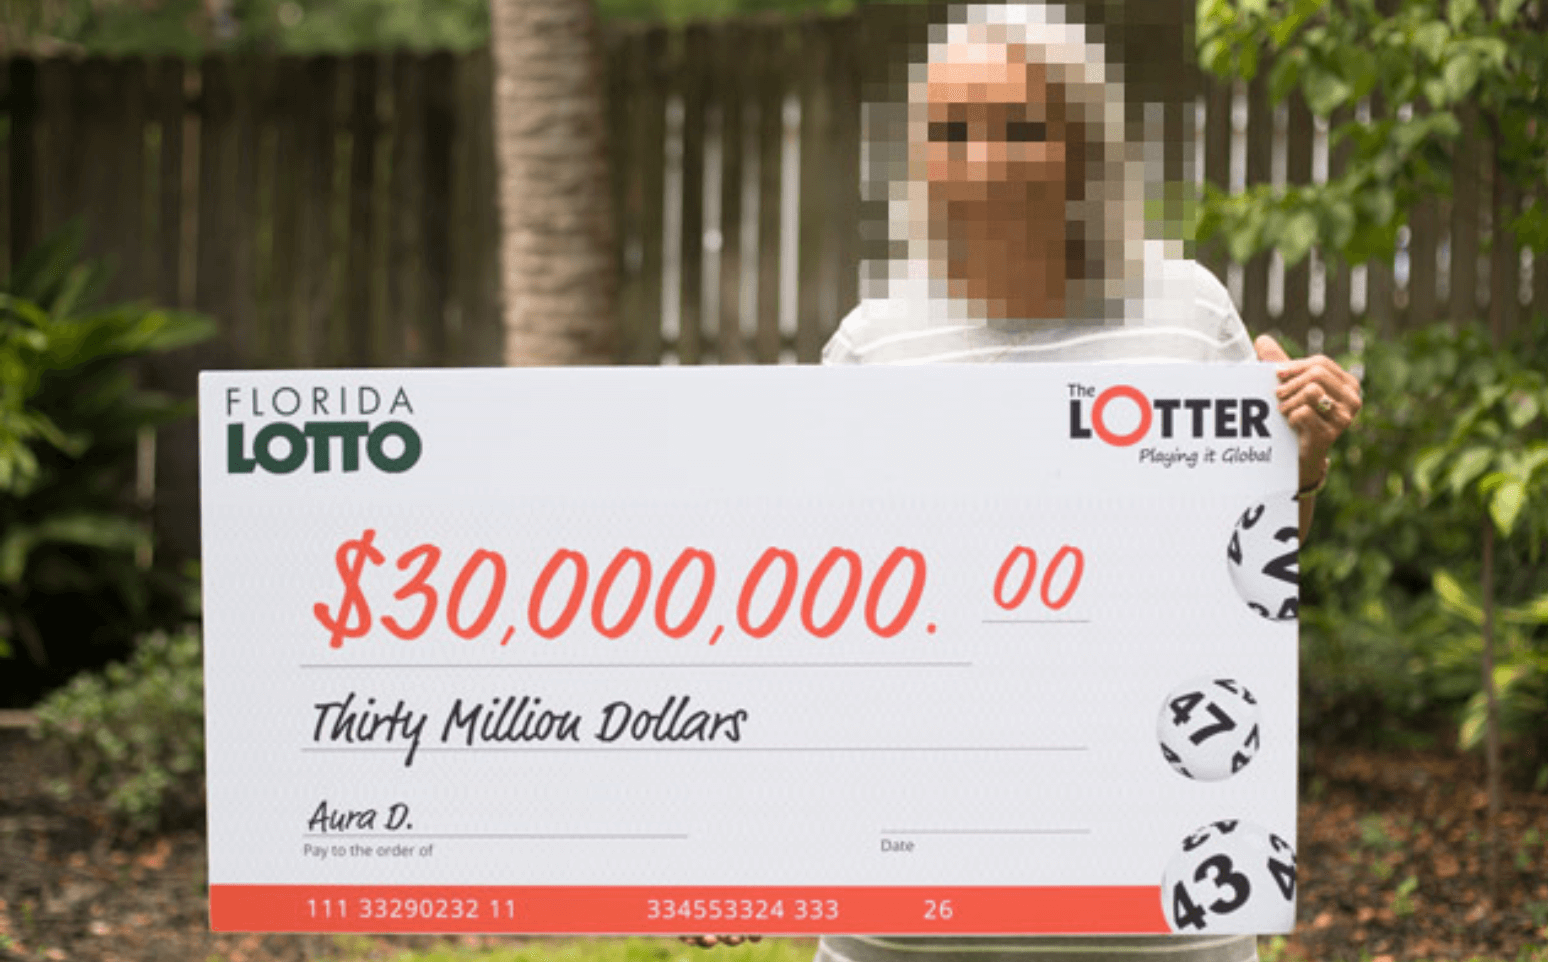 Florida Lottery Winner Aura Dominguez Canto